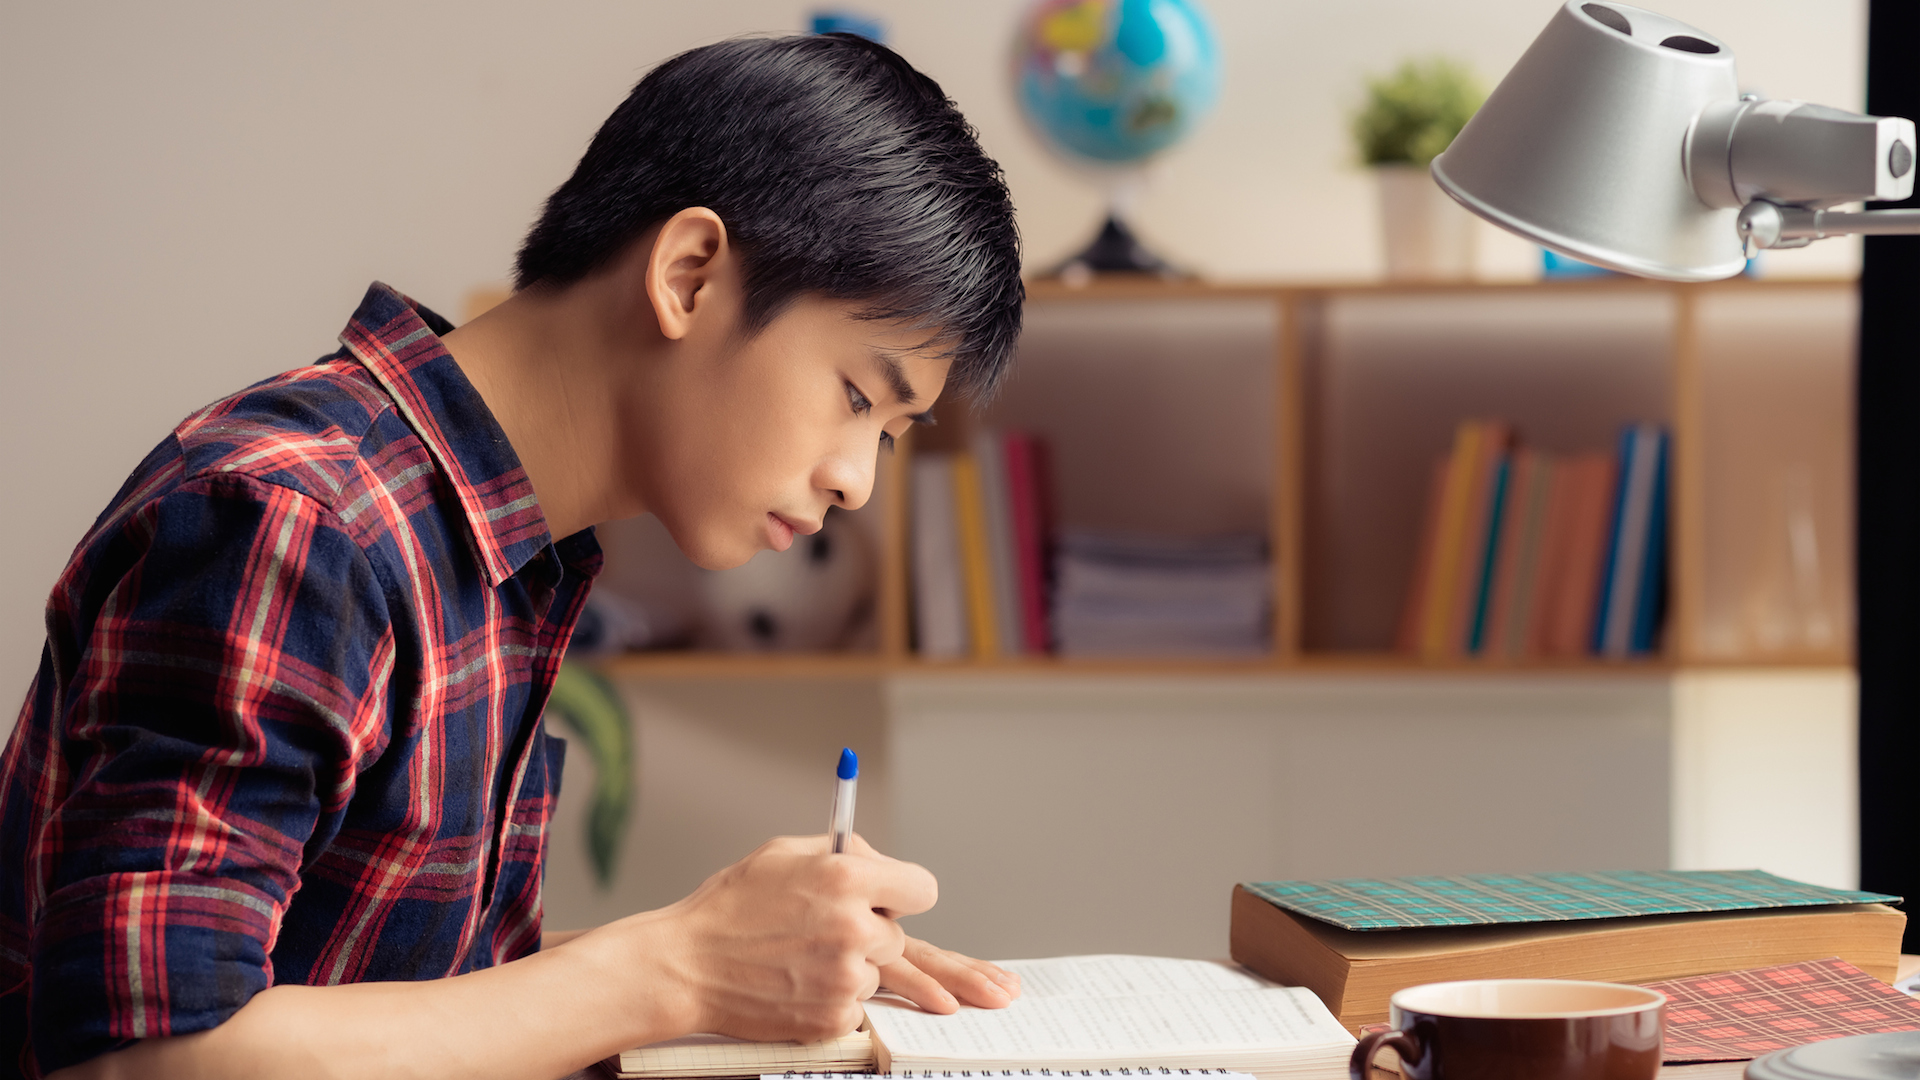 Homework Help for ADHD Brains: A Neurodivergent Study Plan